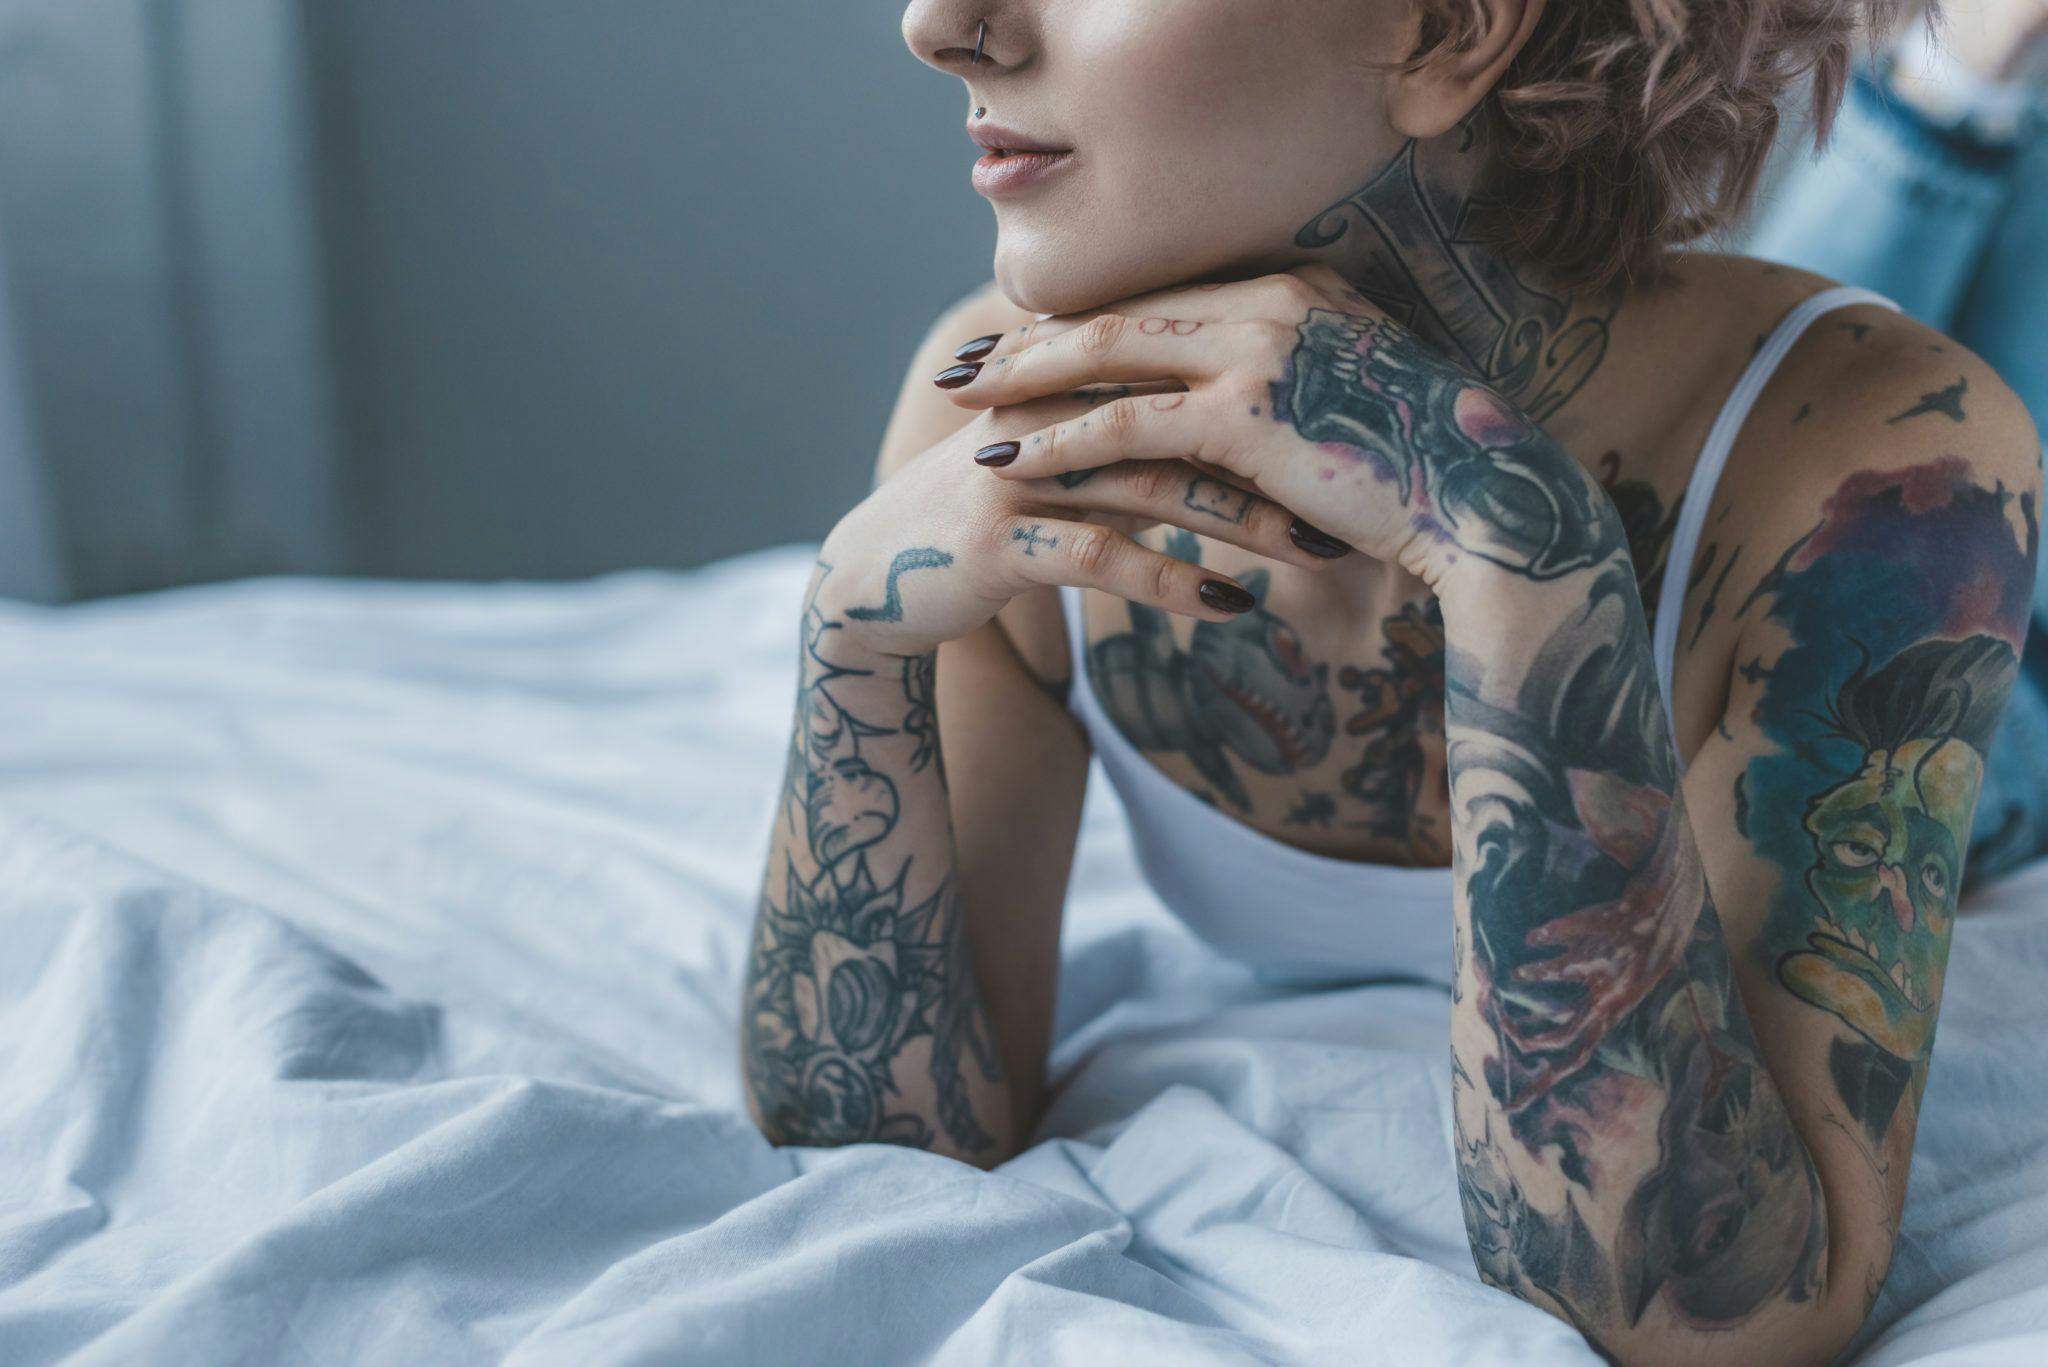 Do Tattoos Affect an Actor’s Career